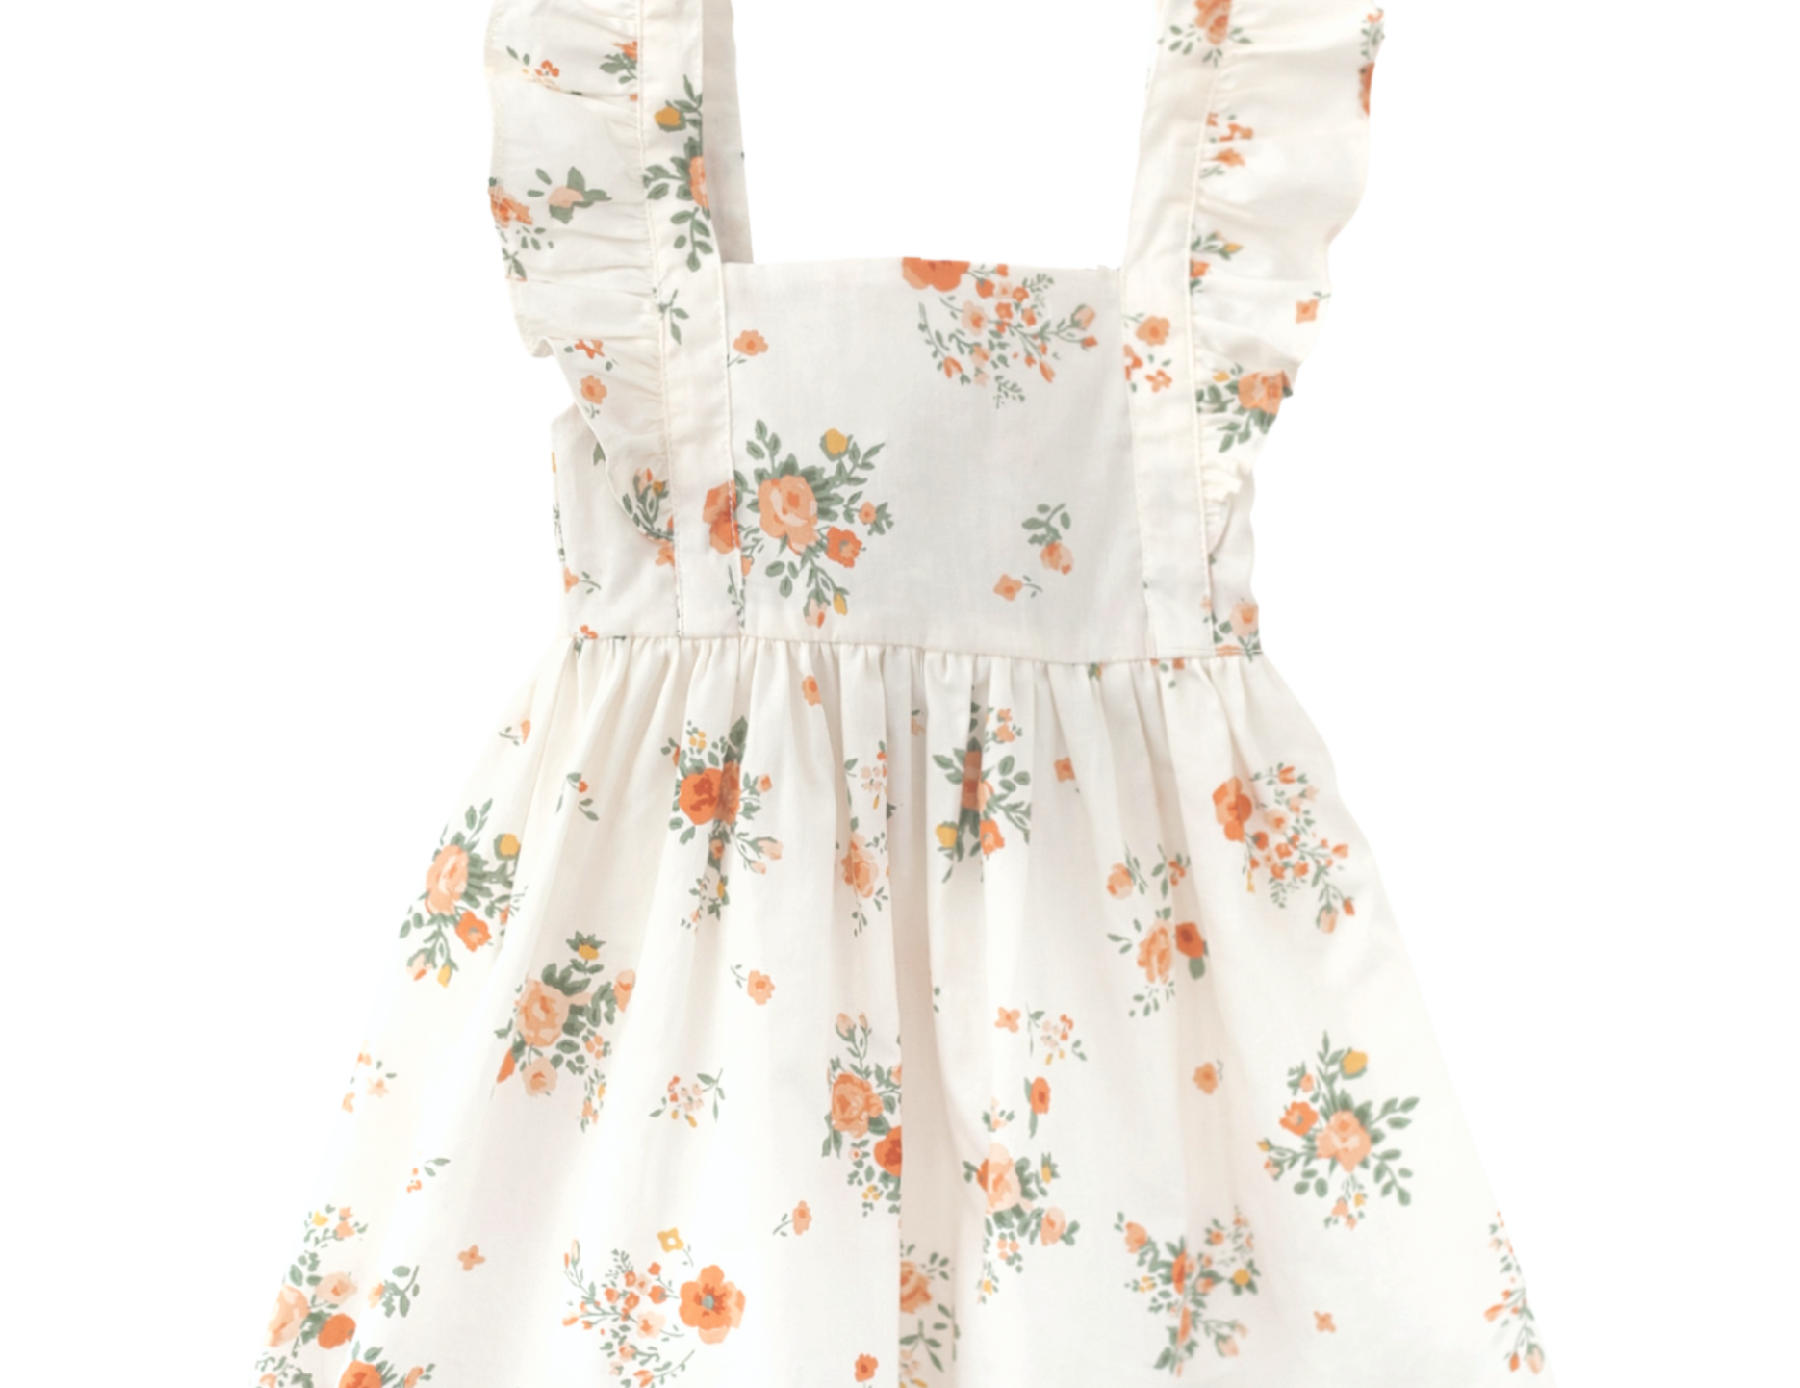 Karibou - Girls My Little Sunshine Cotton Dress - Spring Blooms